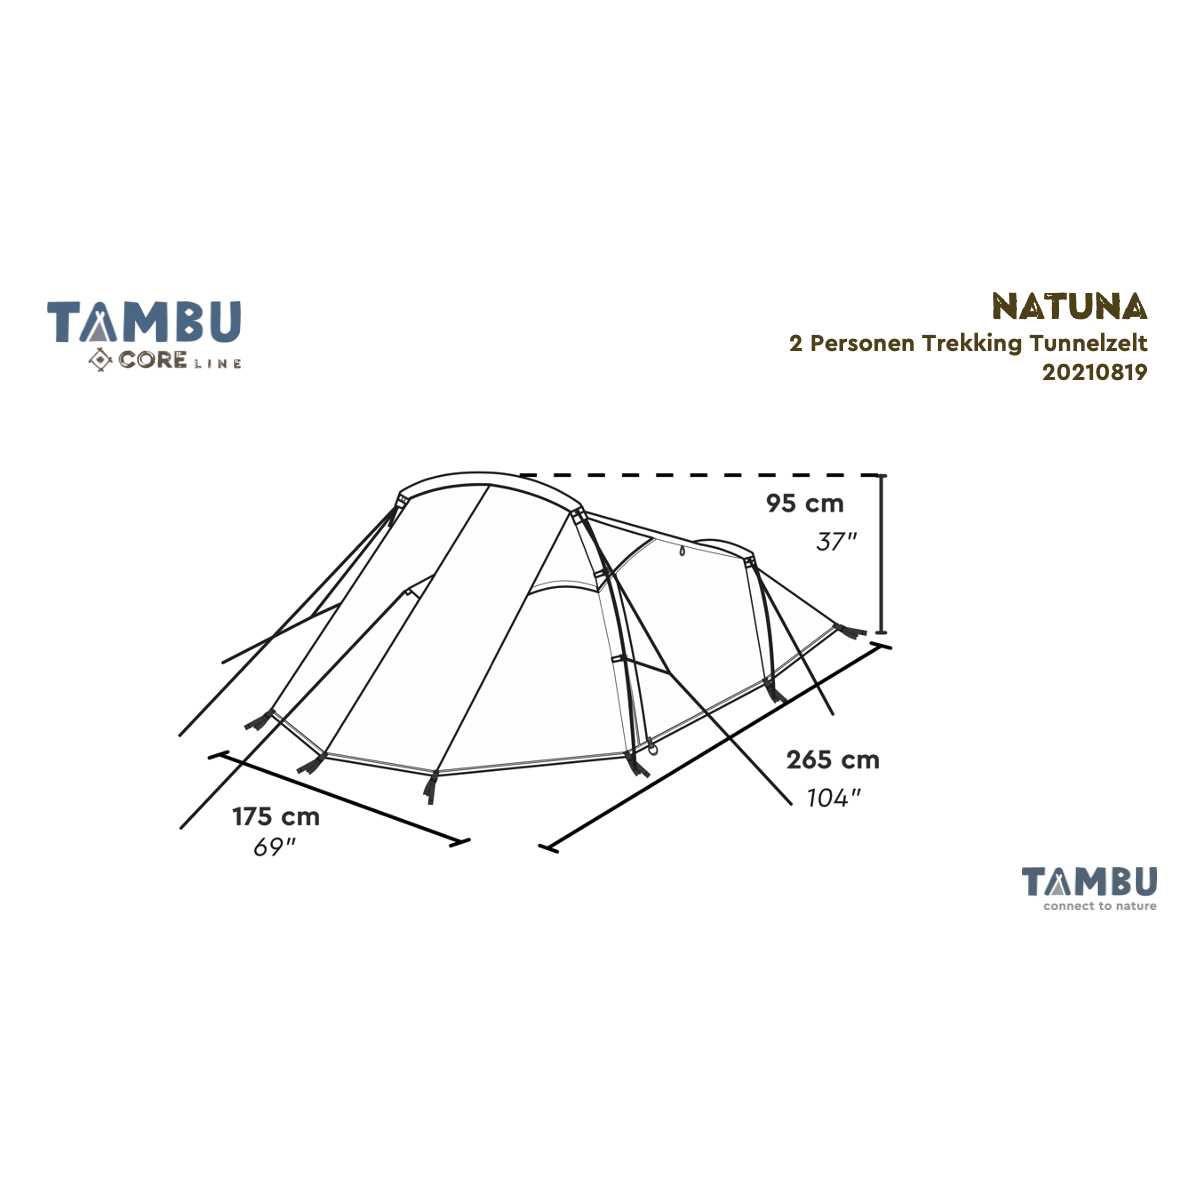 TAMBU NATUNA Trekking Tunnelzelt Beige 2 Personen - 20210819